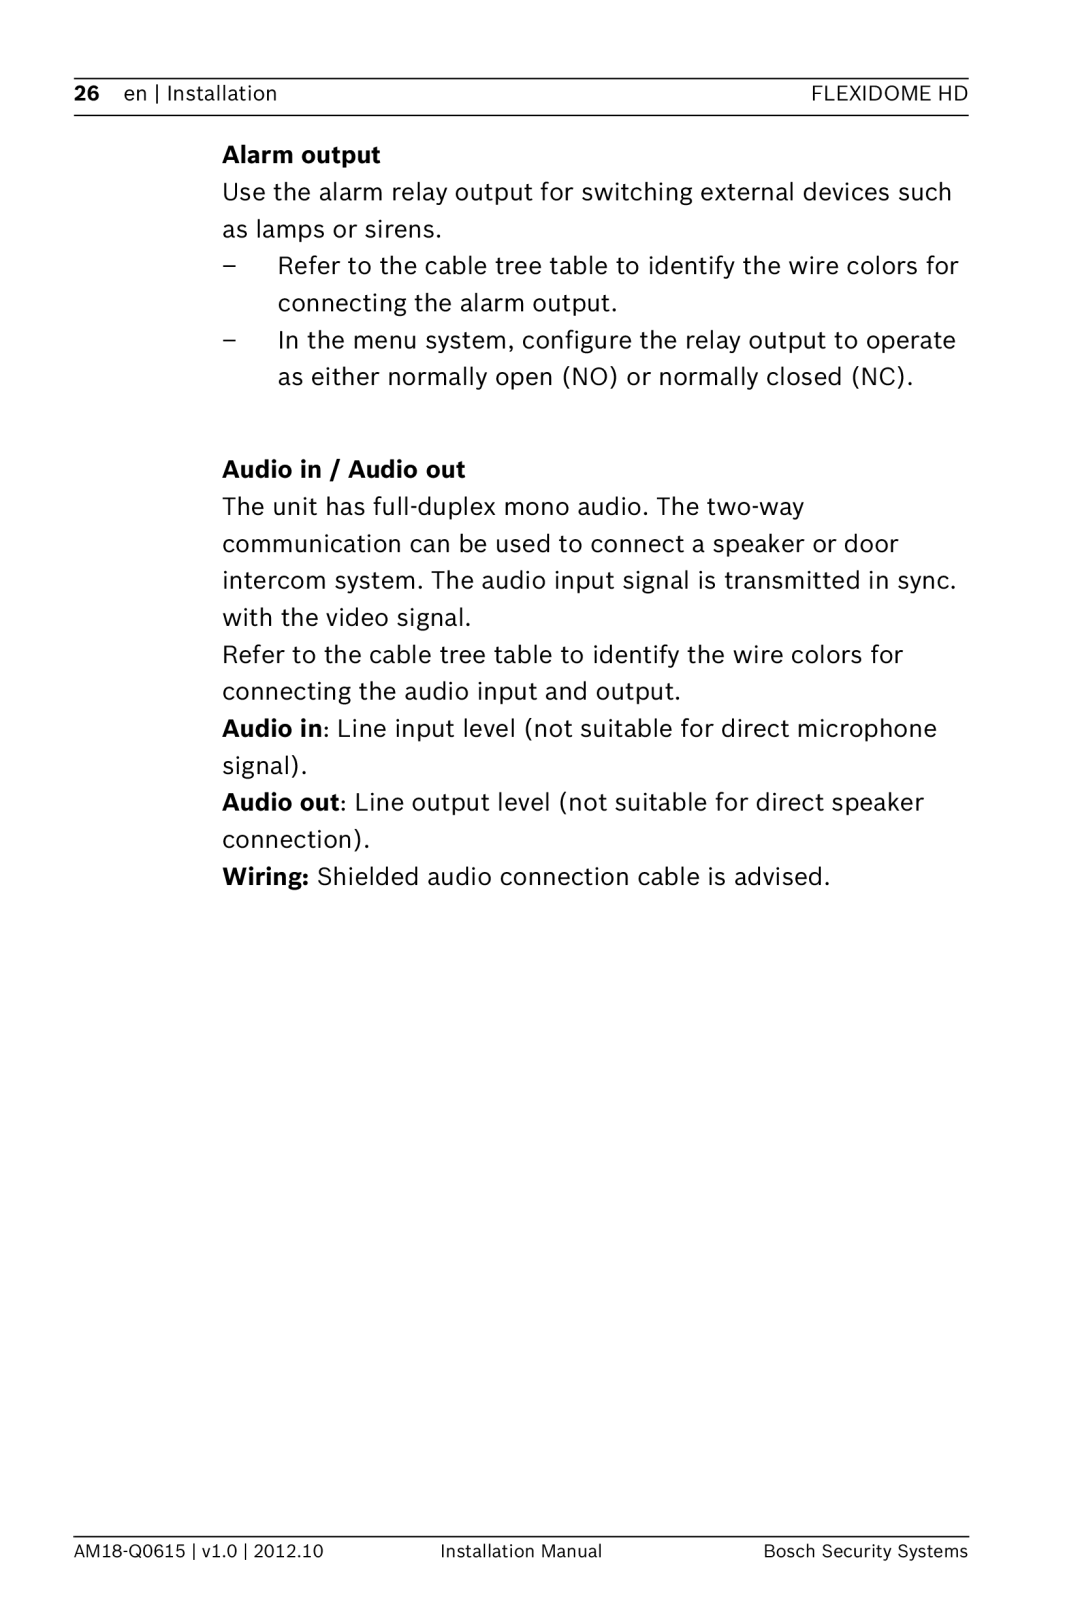 Bosch Appliances NDN-733 installation manual Alarm output, Audio in / Audio out, 26 en | Installation, Flexidome Hd 